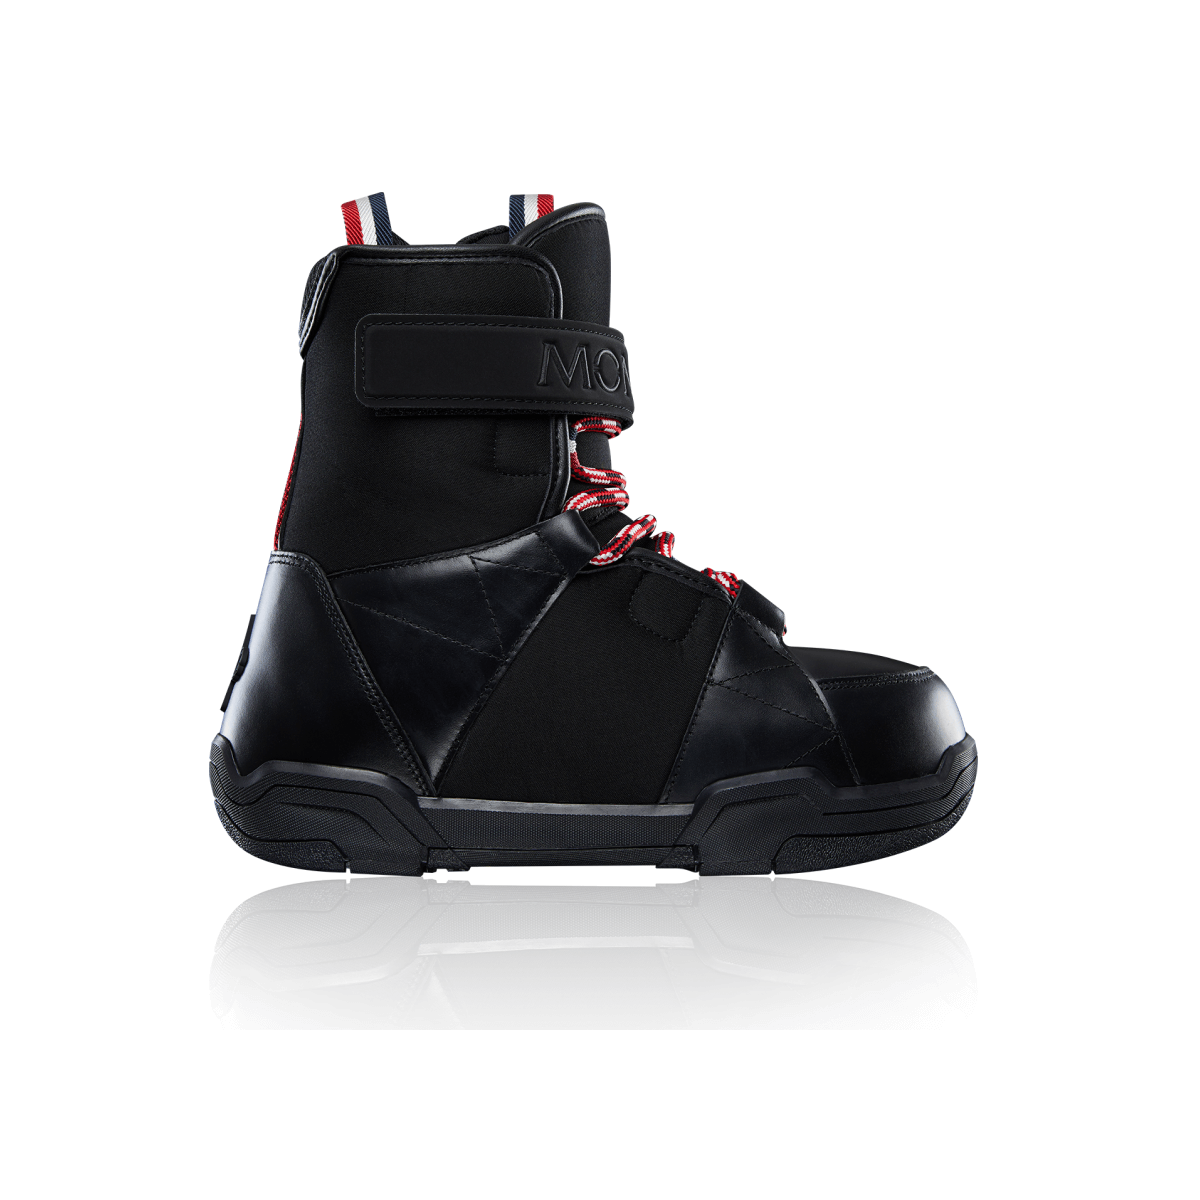 Moncler snow boots